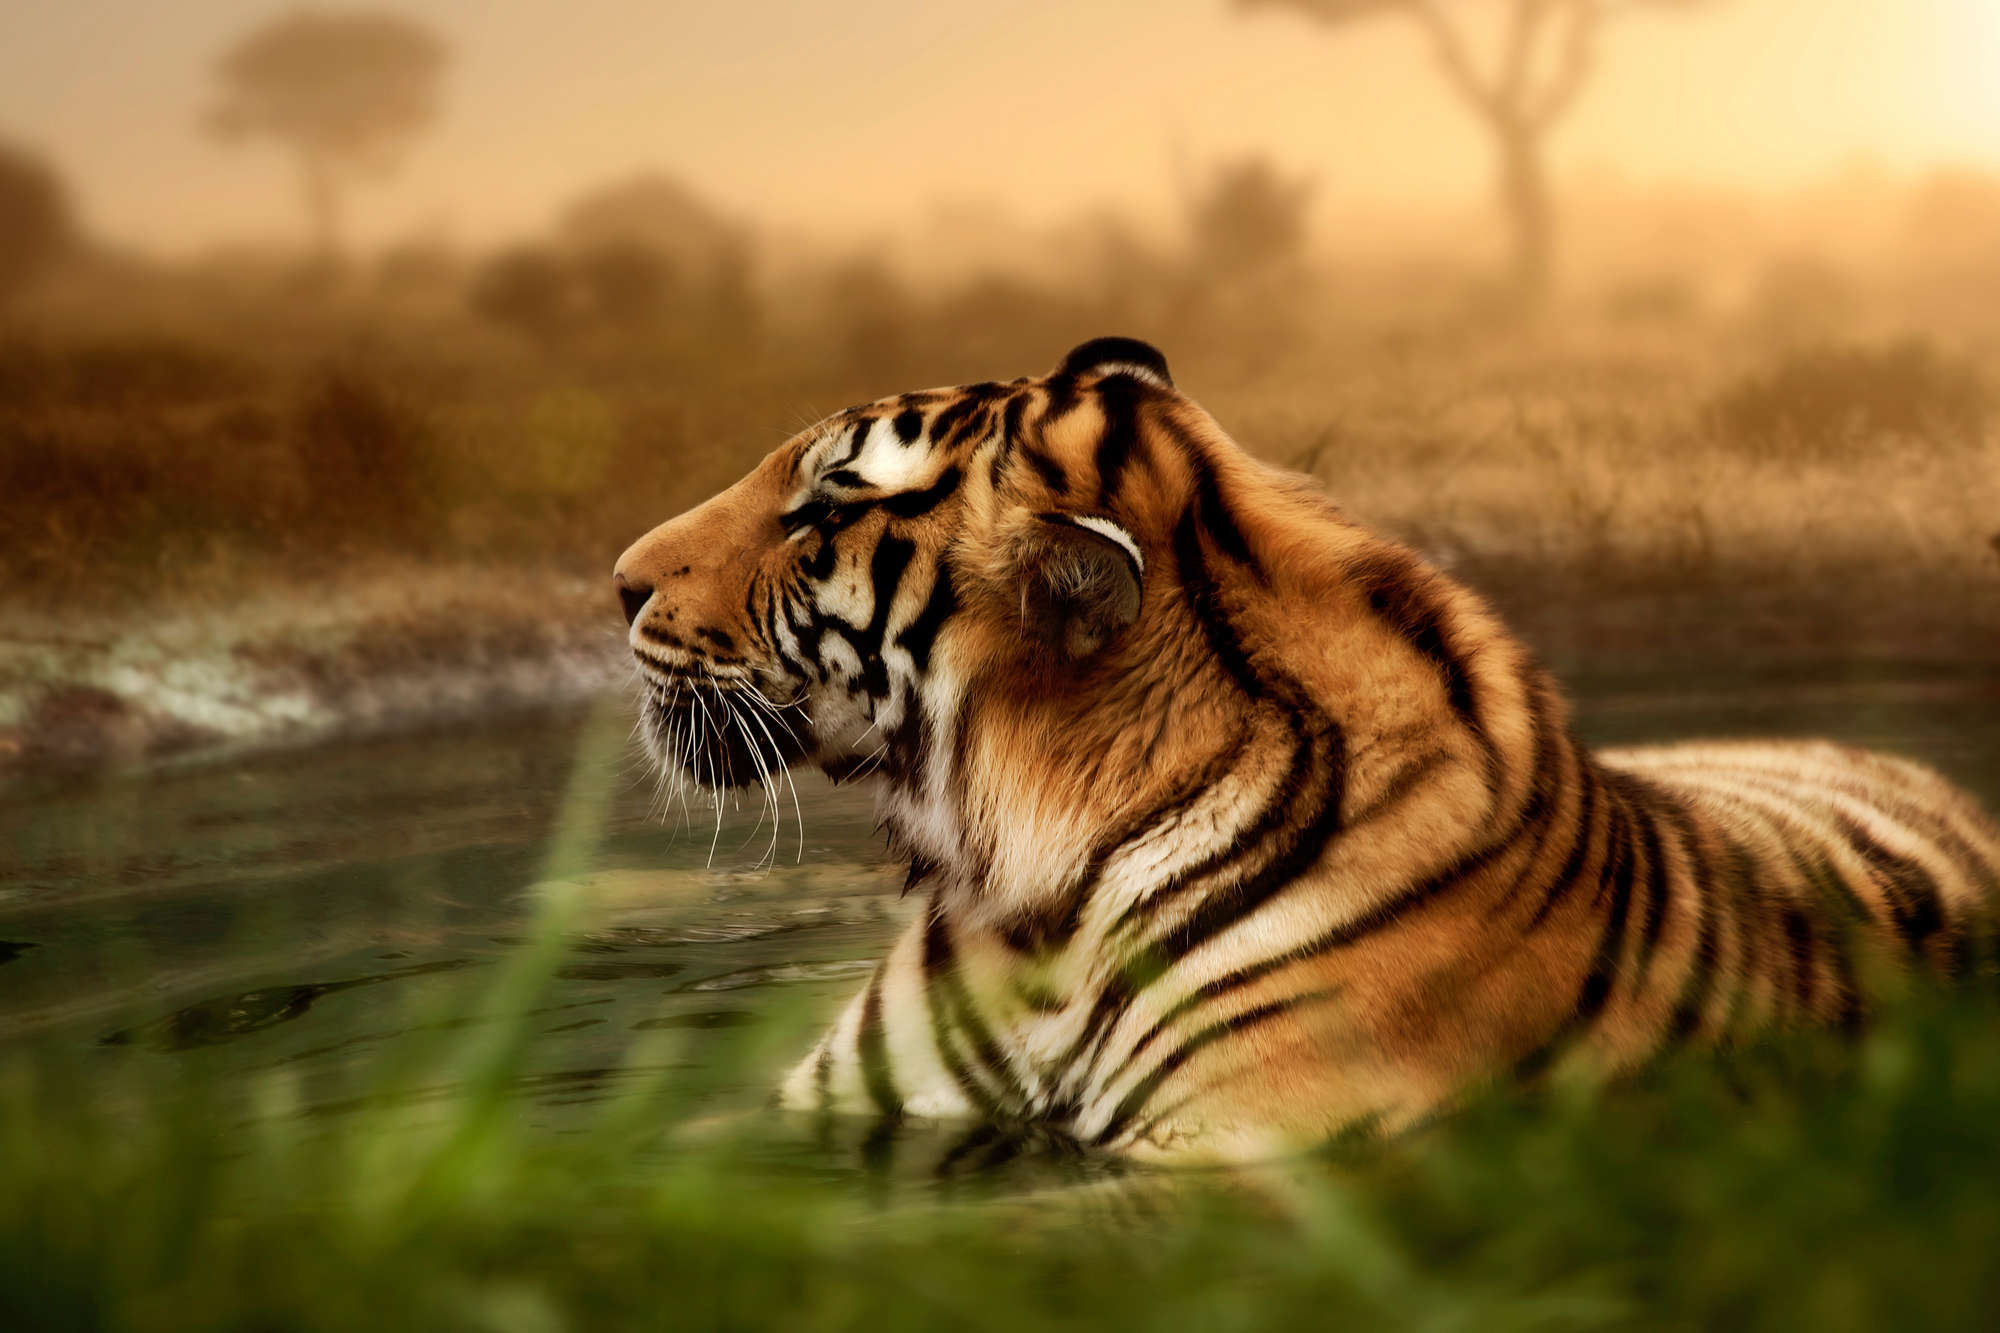             Mural del tigre en la naturaleza sobre vellón liso de nácar
        